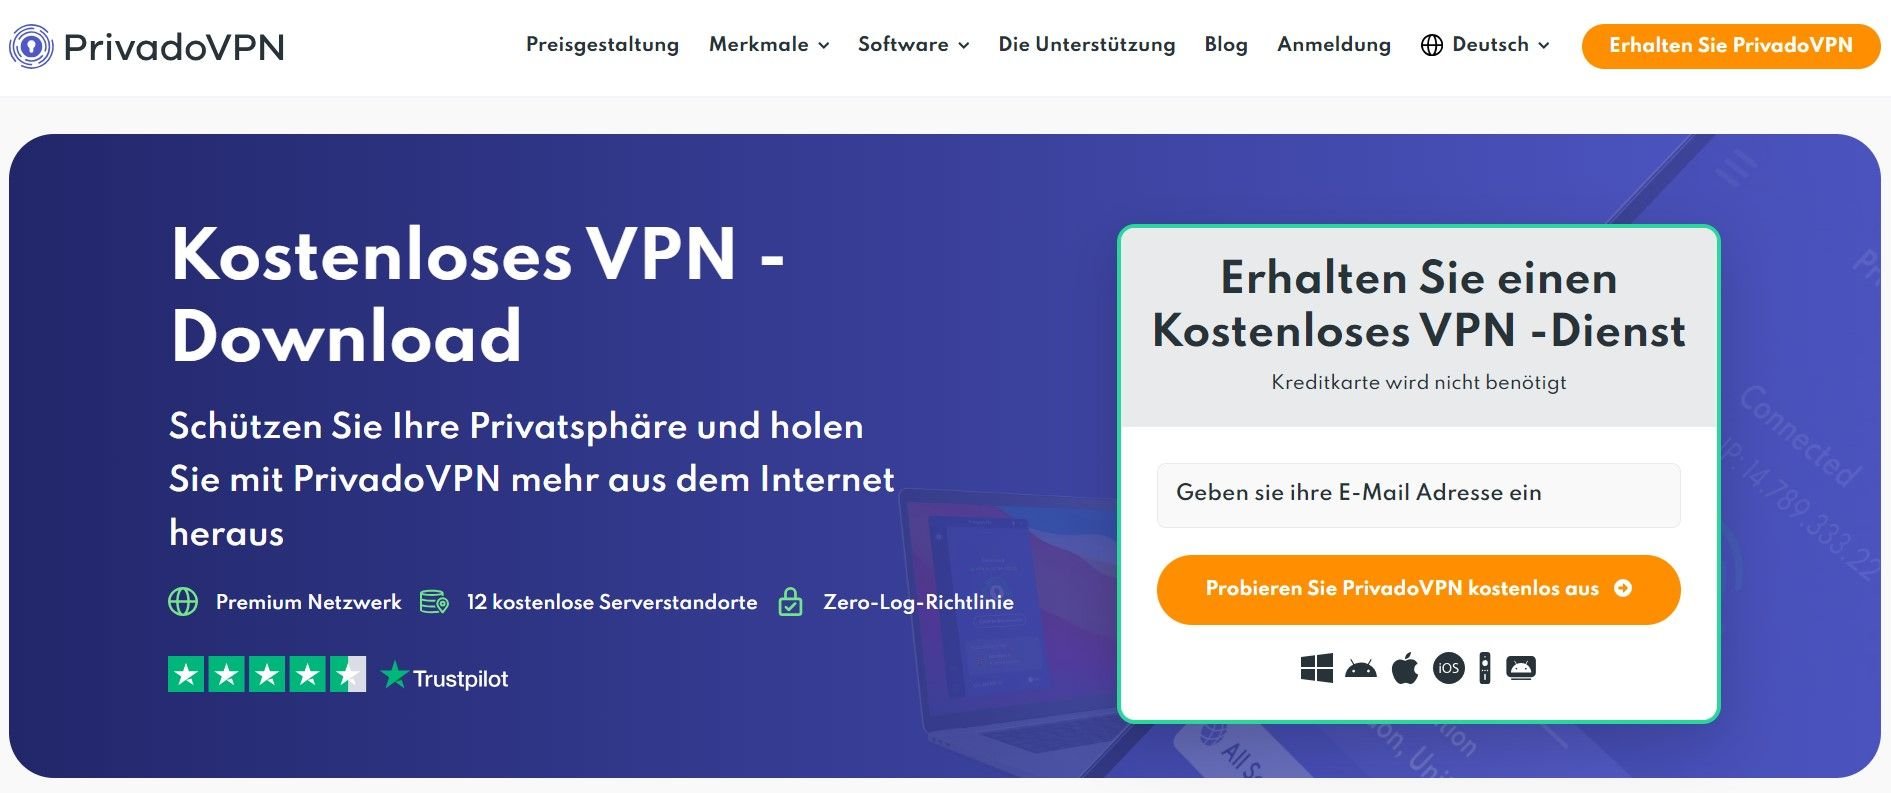 PrivadoVPN bestes kostenloses VPN Türkei gratis